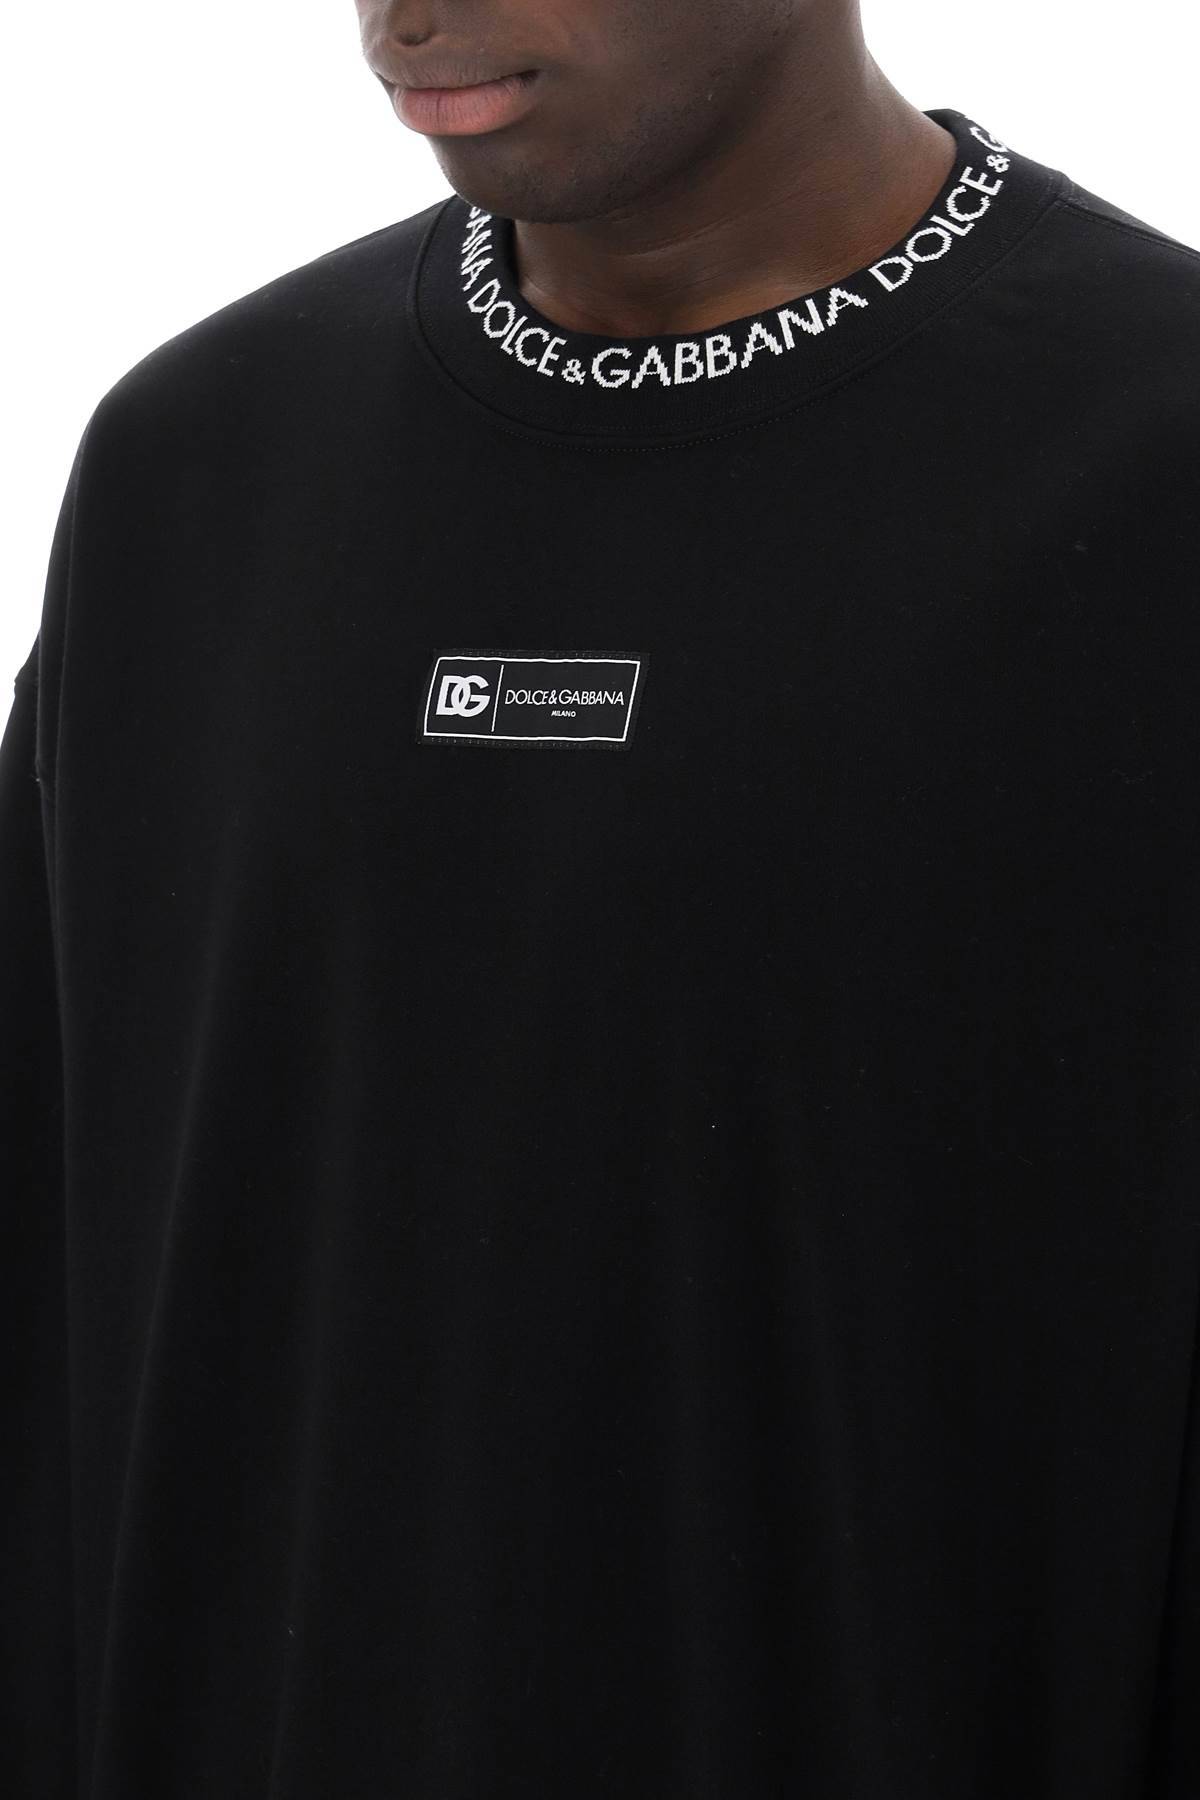 Shop Dolce & Gabbana "oversized Sweatshirt With In Black